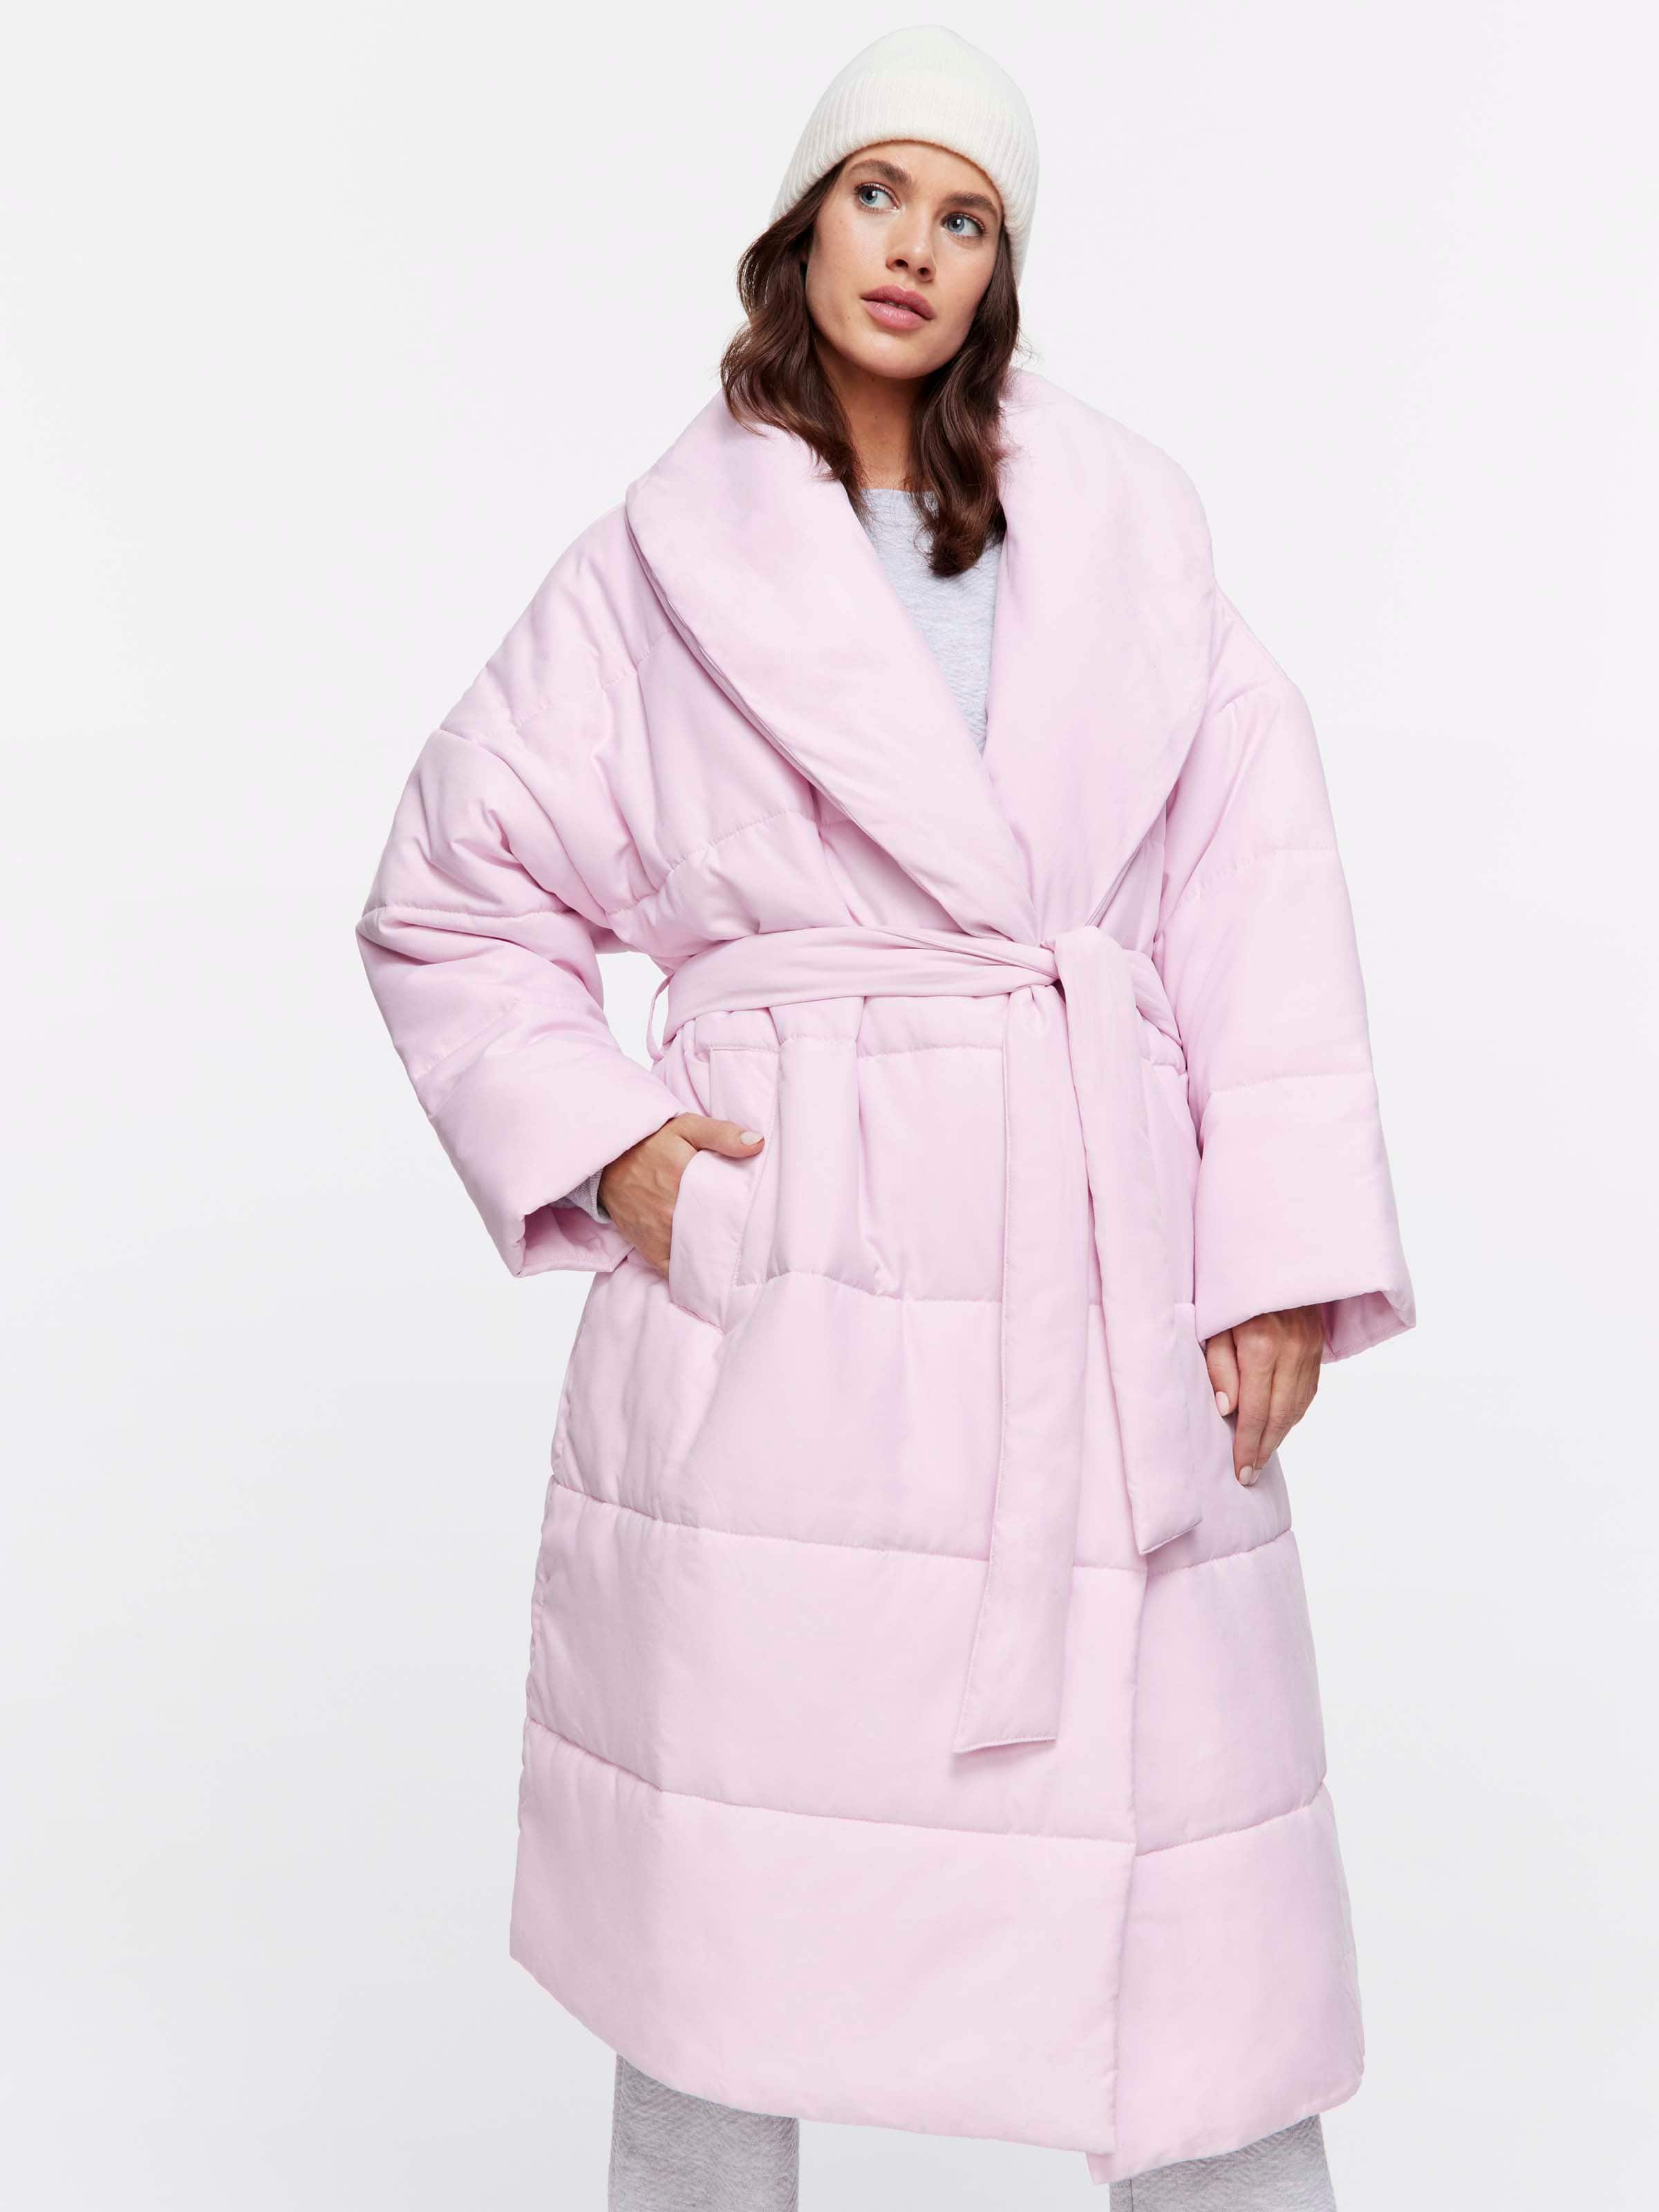 Kimono Bathrobe Coral Fleece Dressing Gowns For Women Winter Robe Heart  Thick Women's Warm Bathrobe Cartoon Nightie Sleepwear | lupon.gov.ph